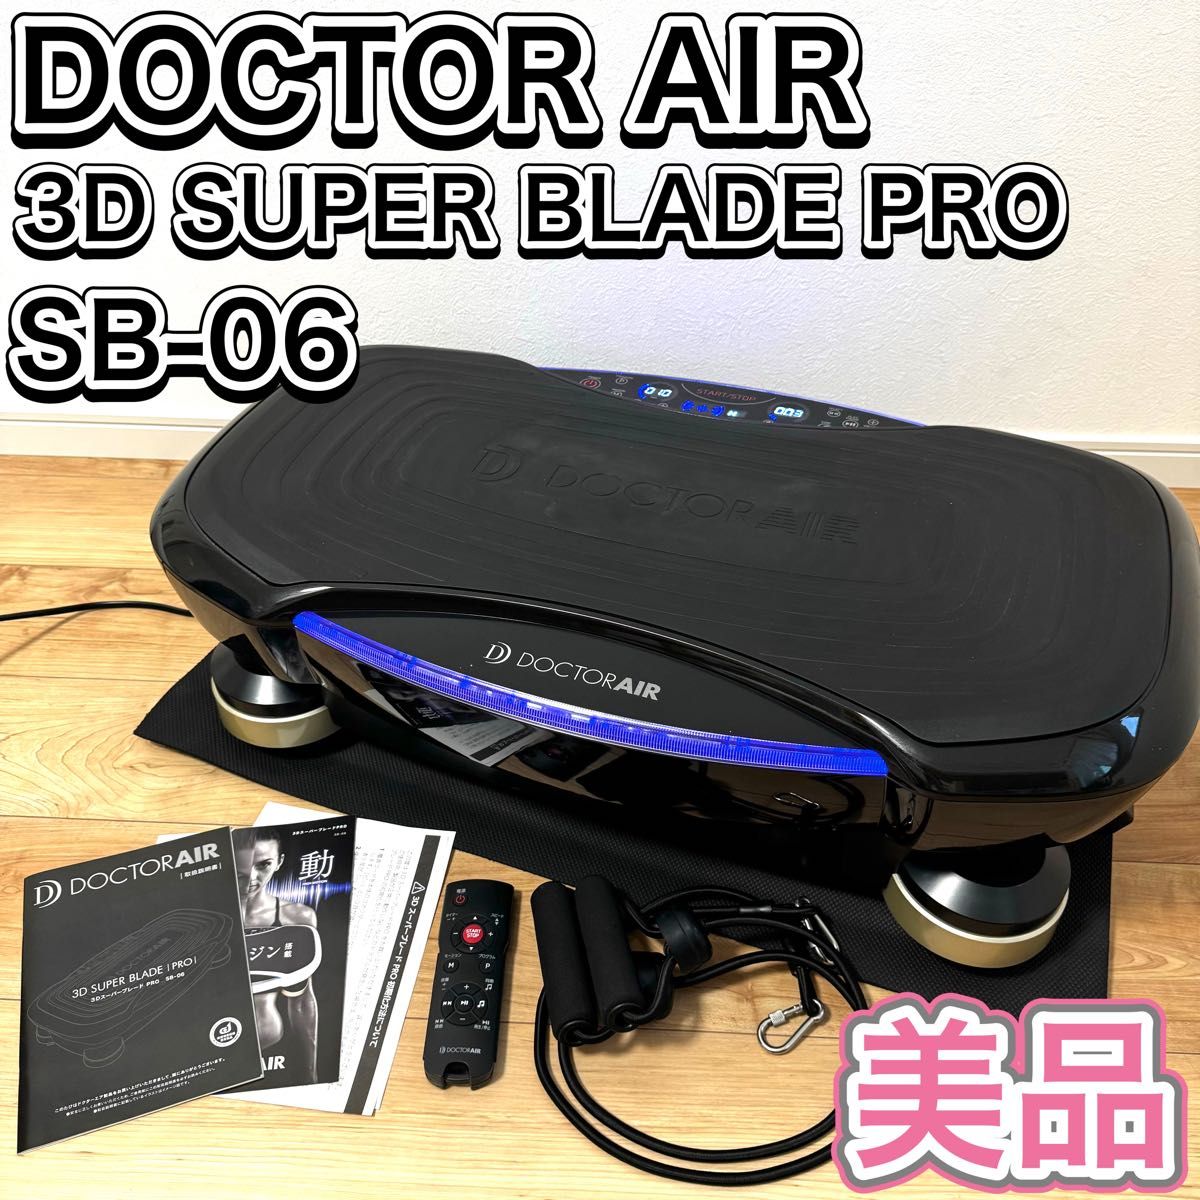 DOCTORAIR 3D SUPER BLADE PRO SB-06 振動マシン